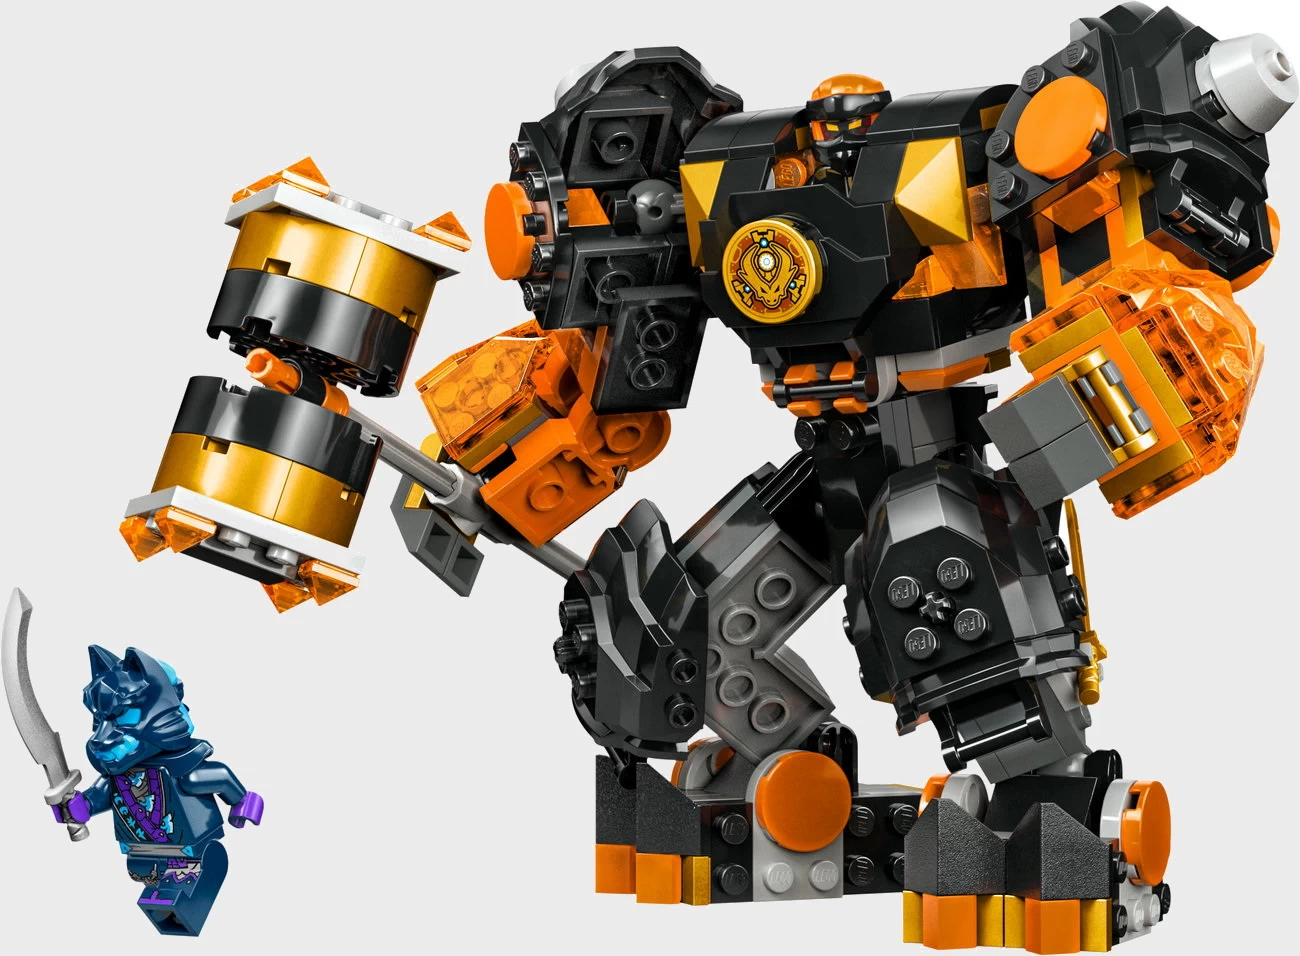 LEGO Ninjago 71806 - Coles Erdmech